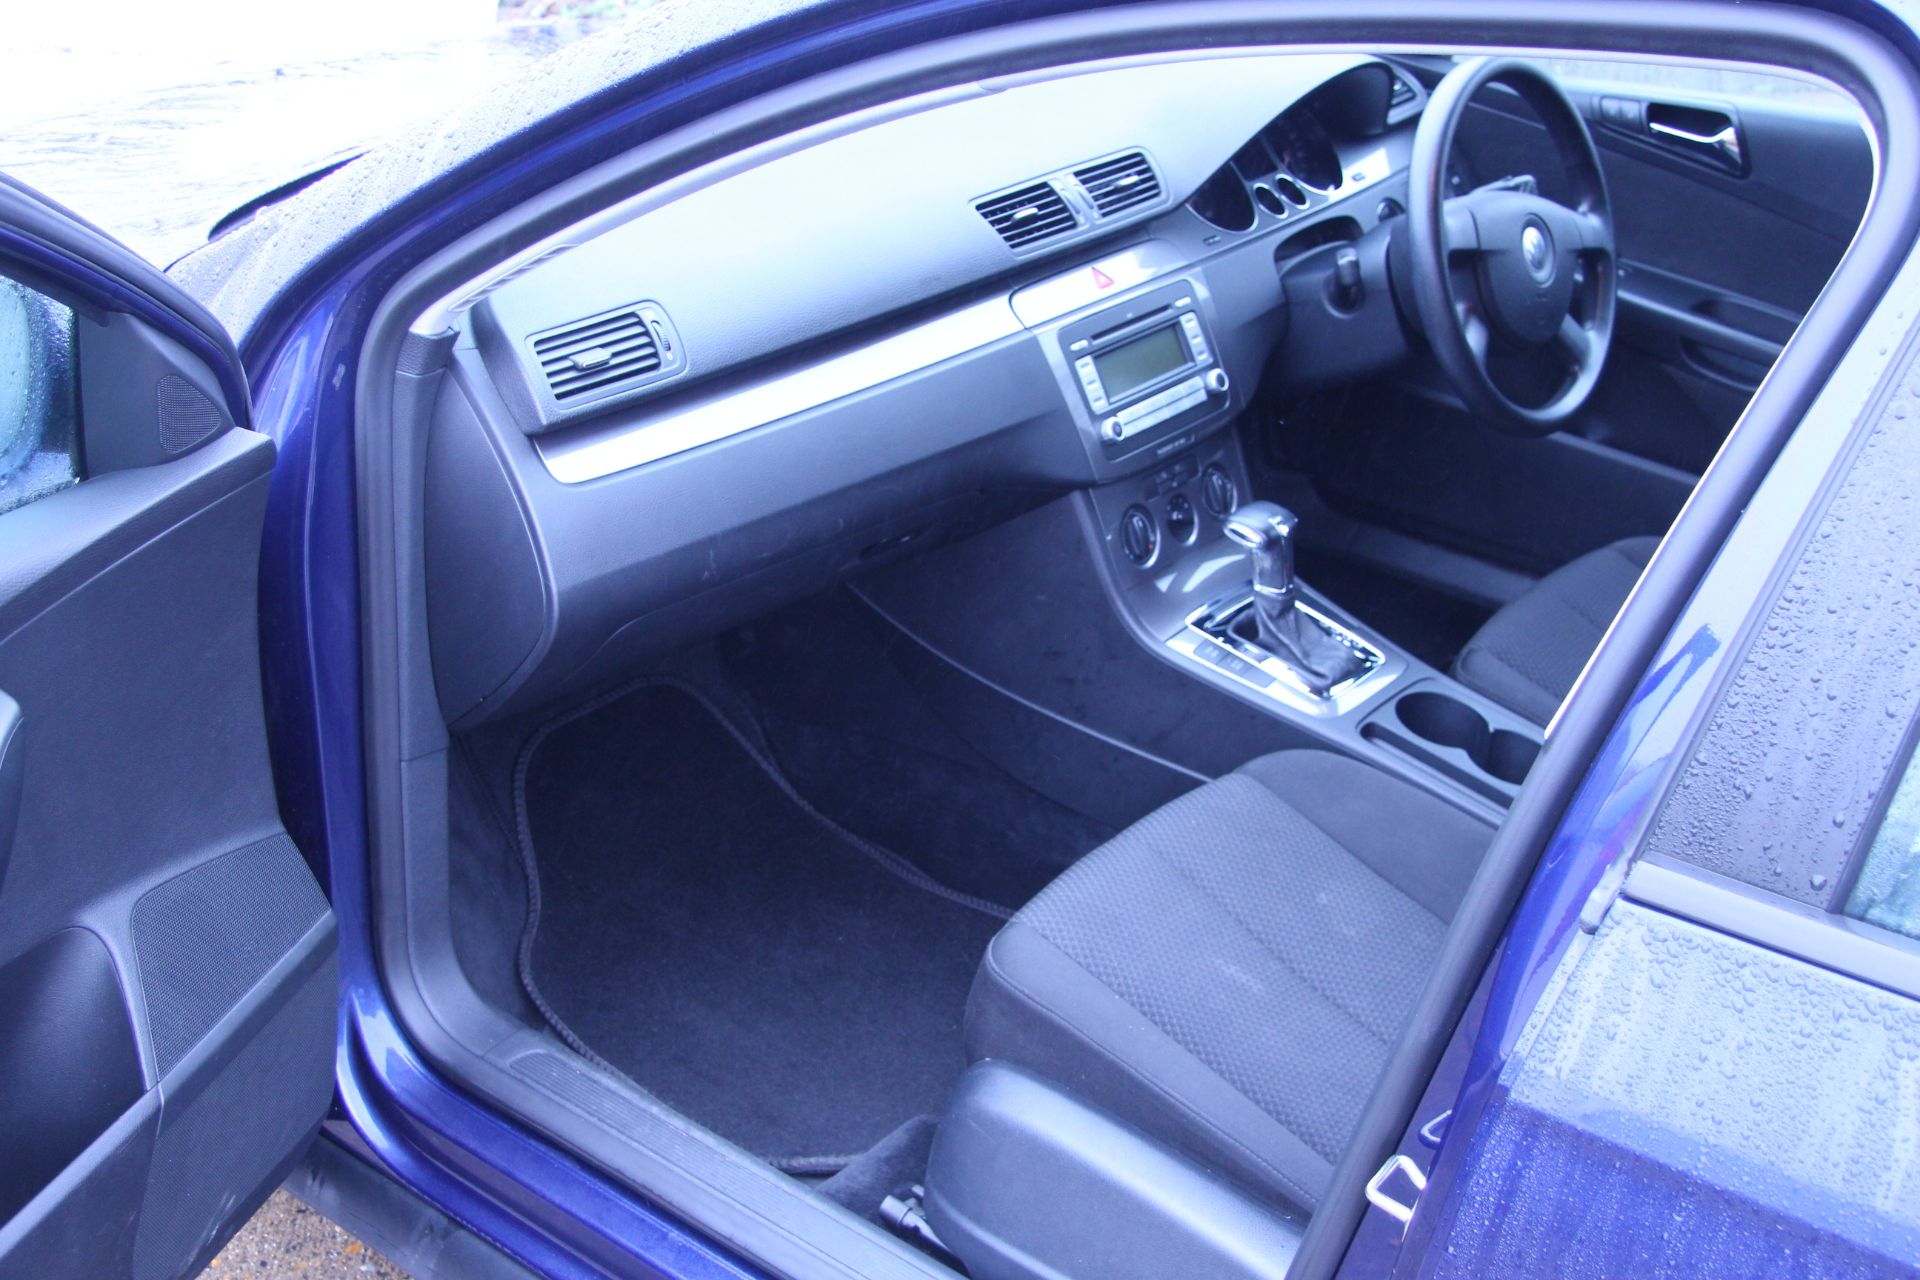 Blue VW Passat Estate 5 Door - 2.0 S TDI - One Key - Automatic DSG - 66414 Miles - MOT Till June - Image 7 of 9